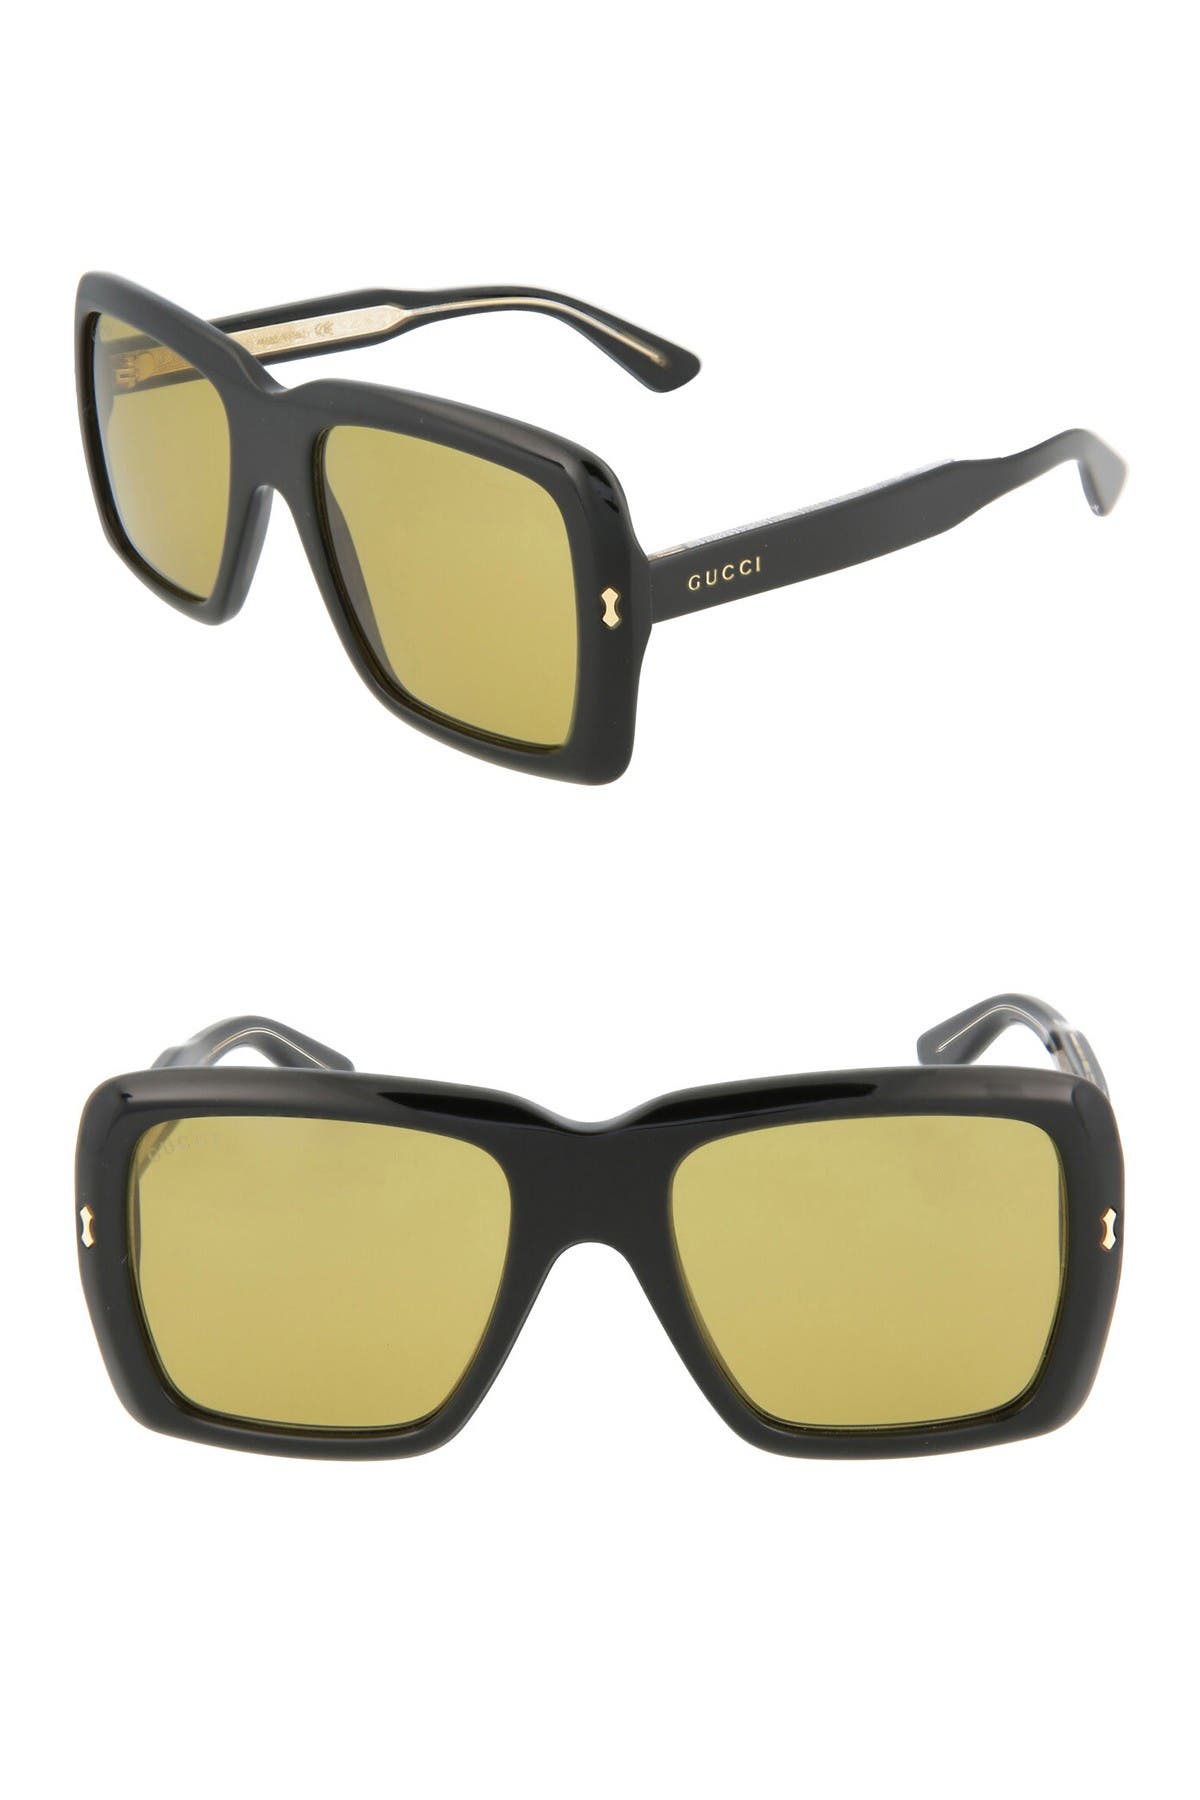 gucci 53mm sunglasses